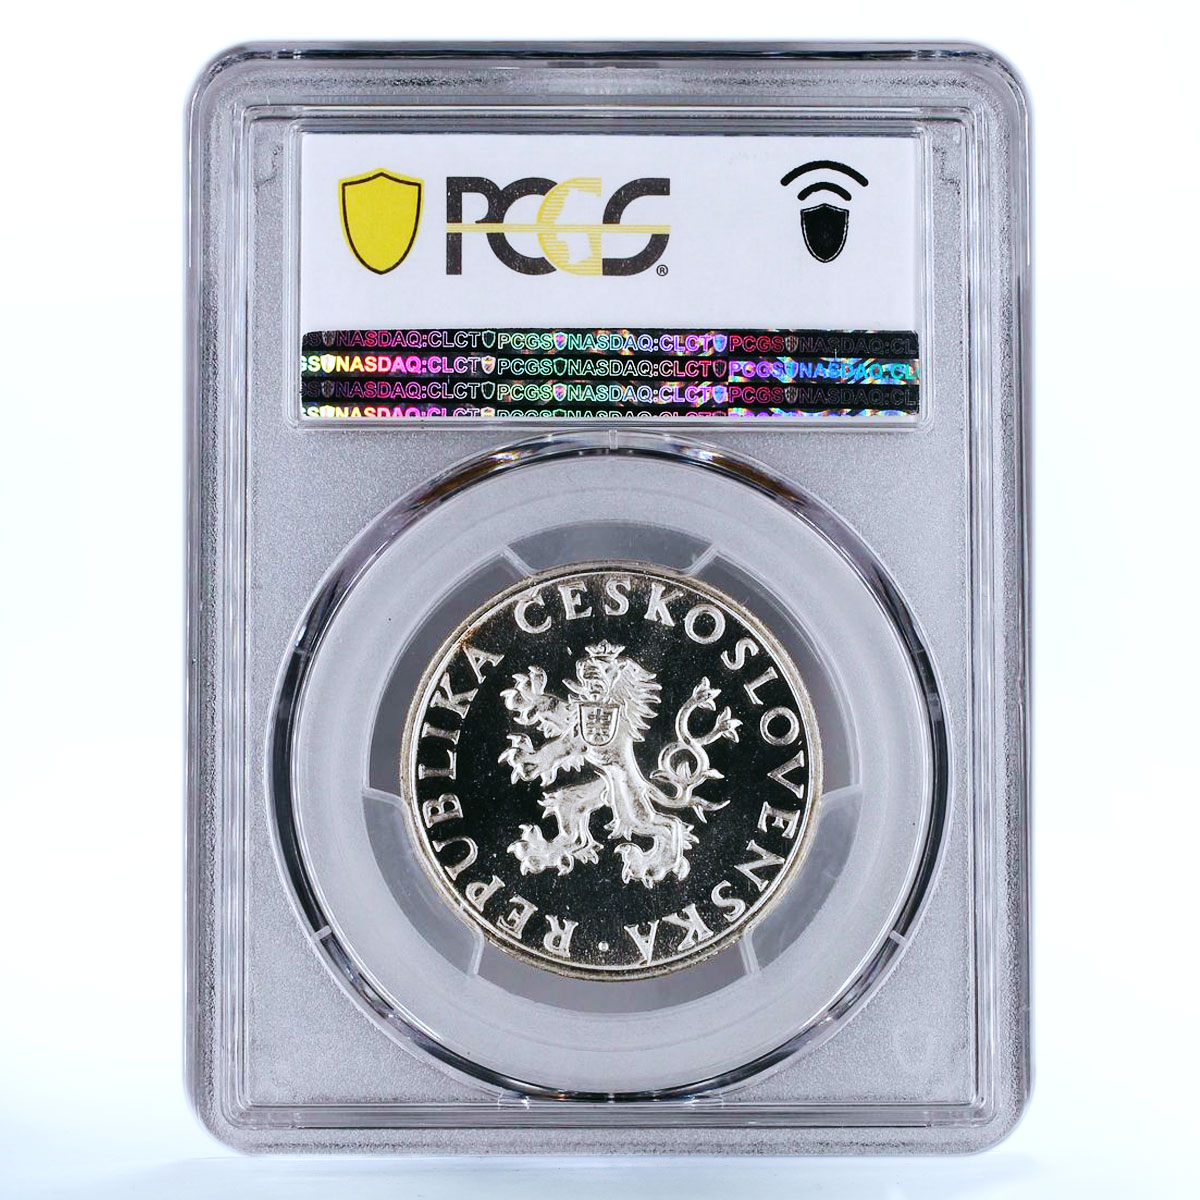 Czechoslovakia 10 korun Liberation from Fascism PR67 PCGS silver coin 1955